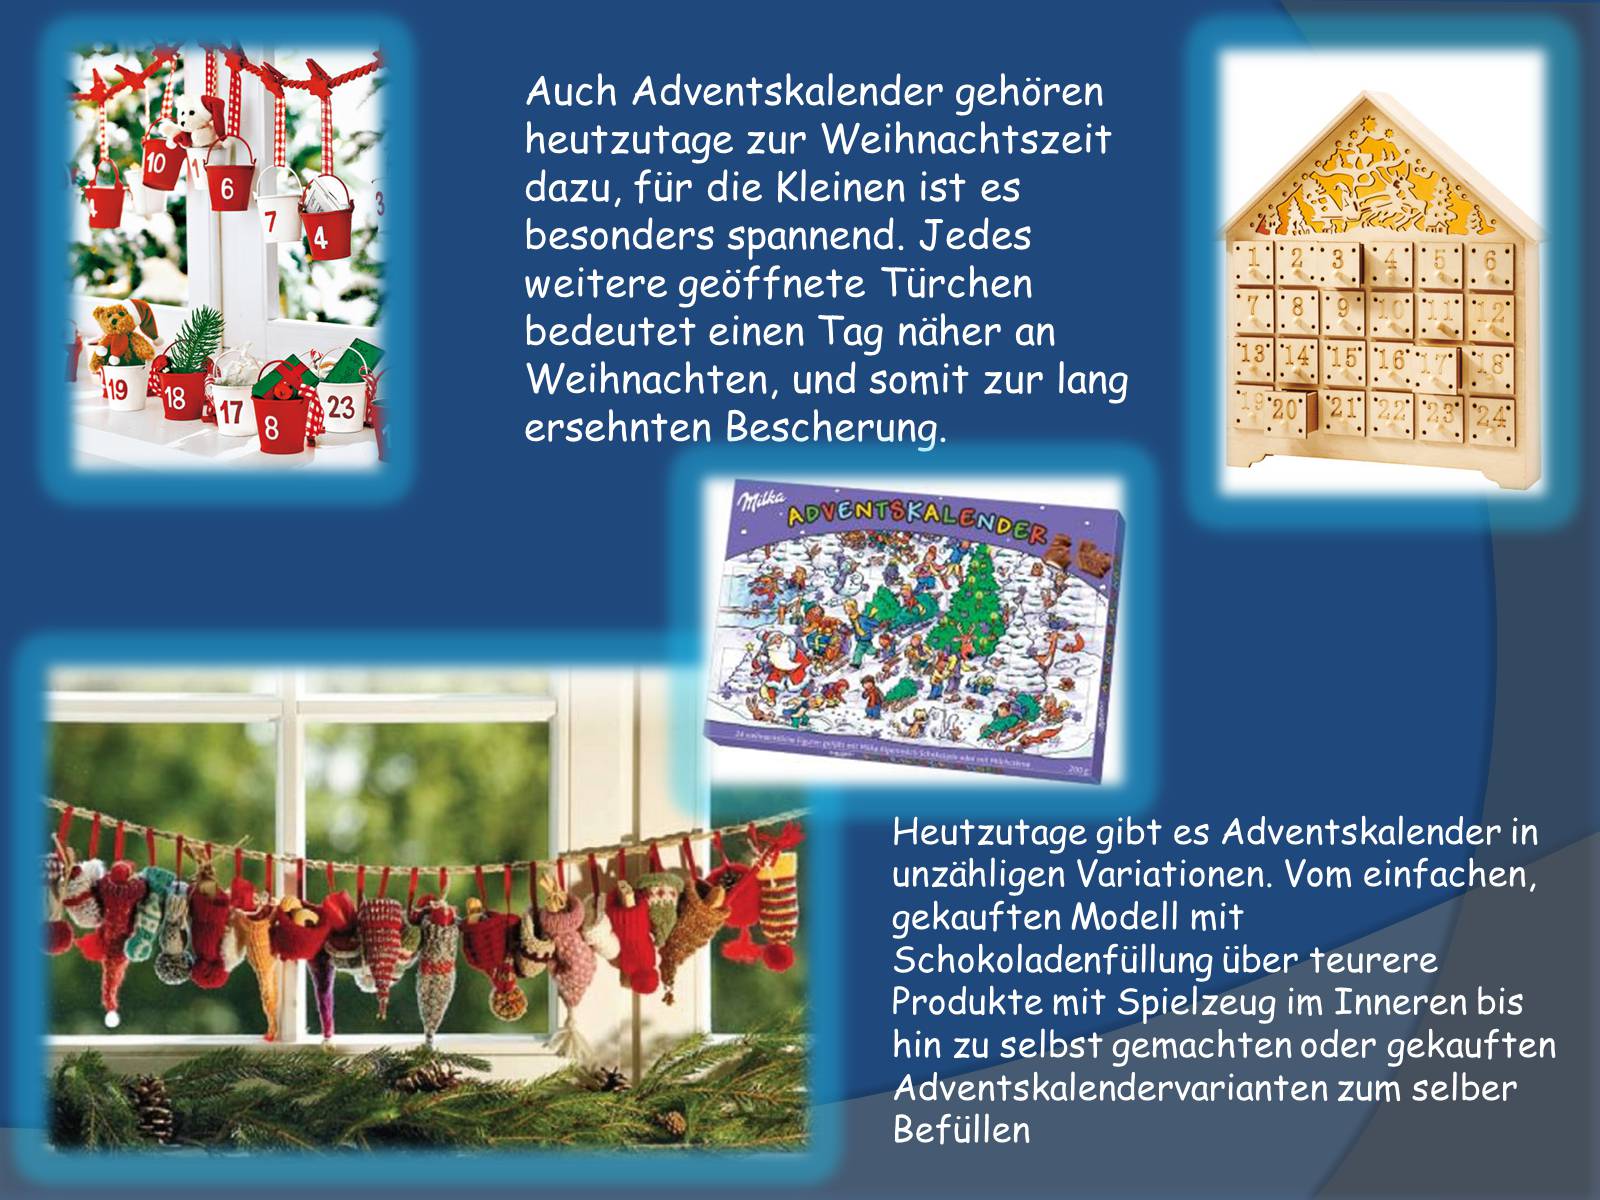 Презентація на тему «Weihnachten in Deutschland» (варіант 2) - Слайд #4